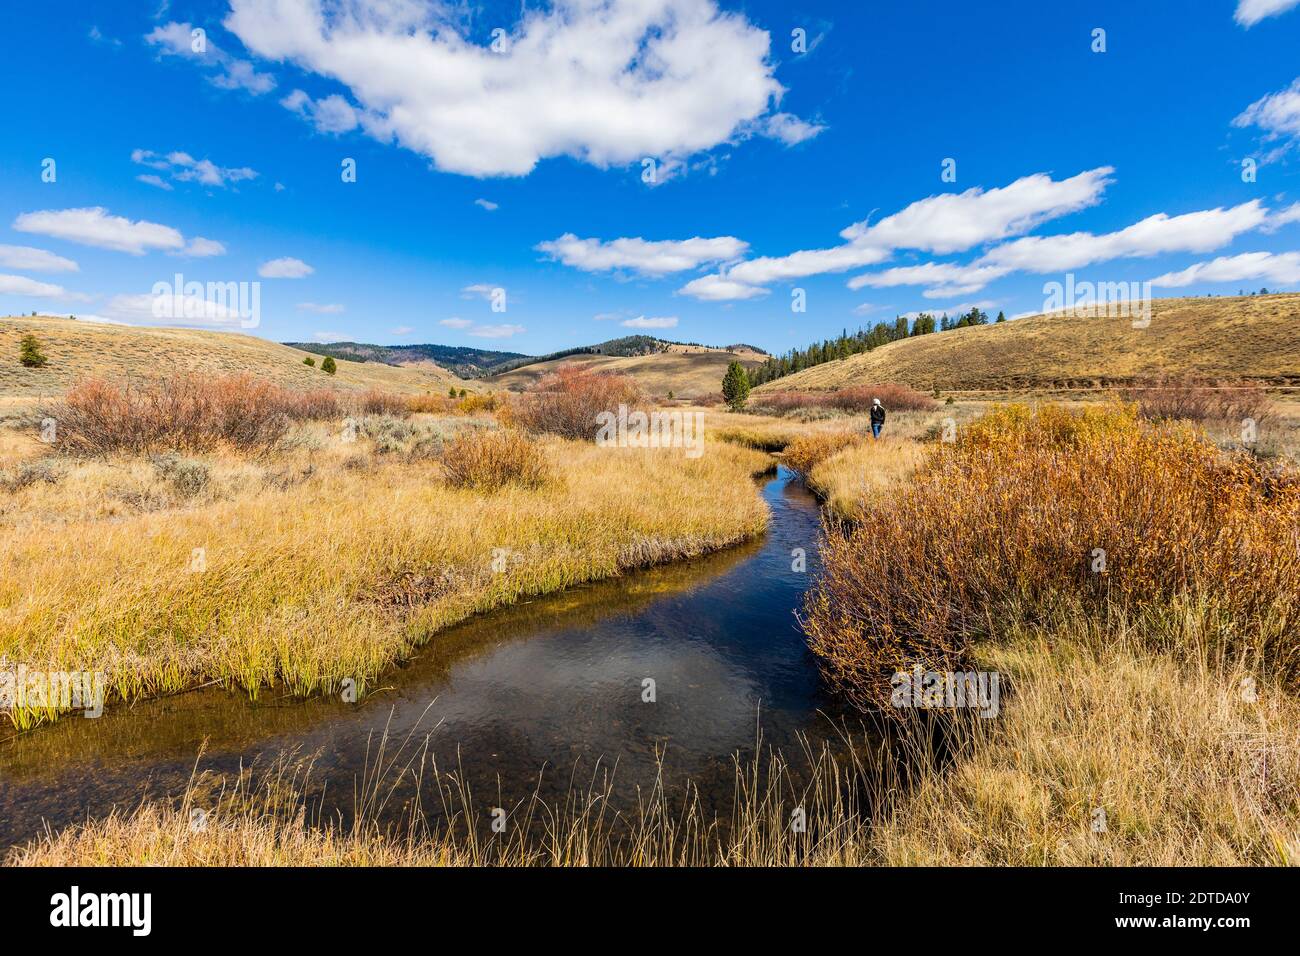 USA, Idaho, Stanley, Senior woman walking by stream among grass in non urban landscape Stock Photo